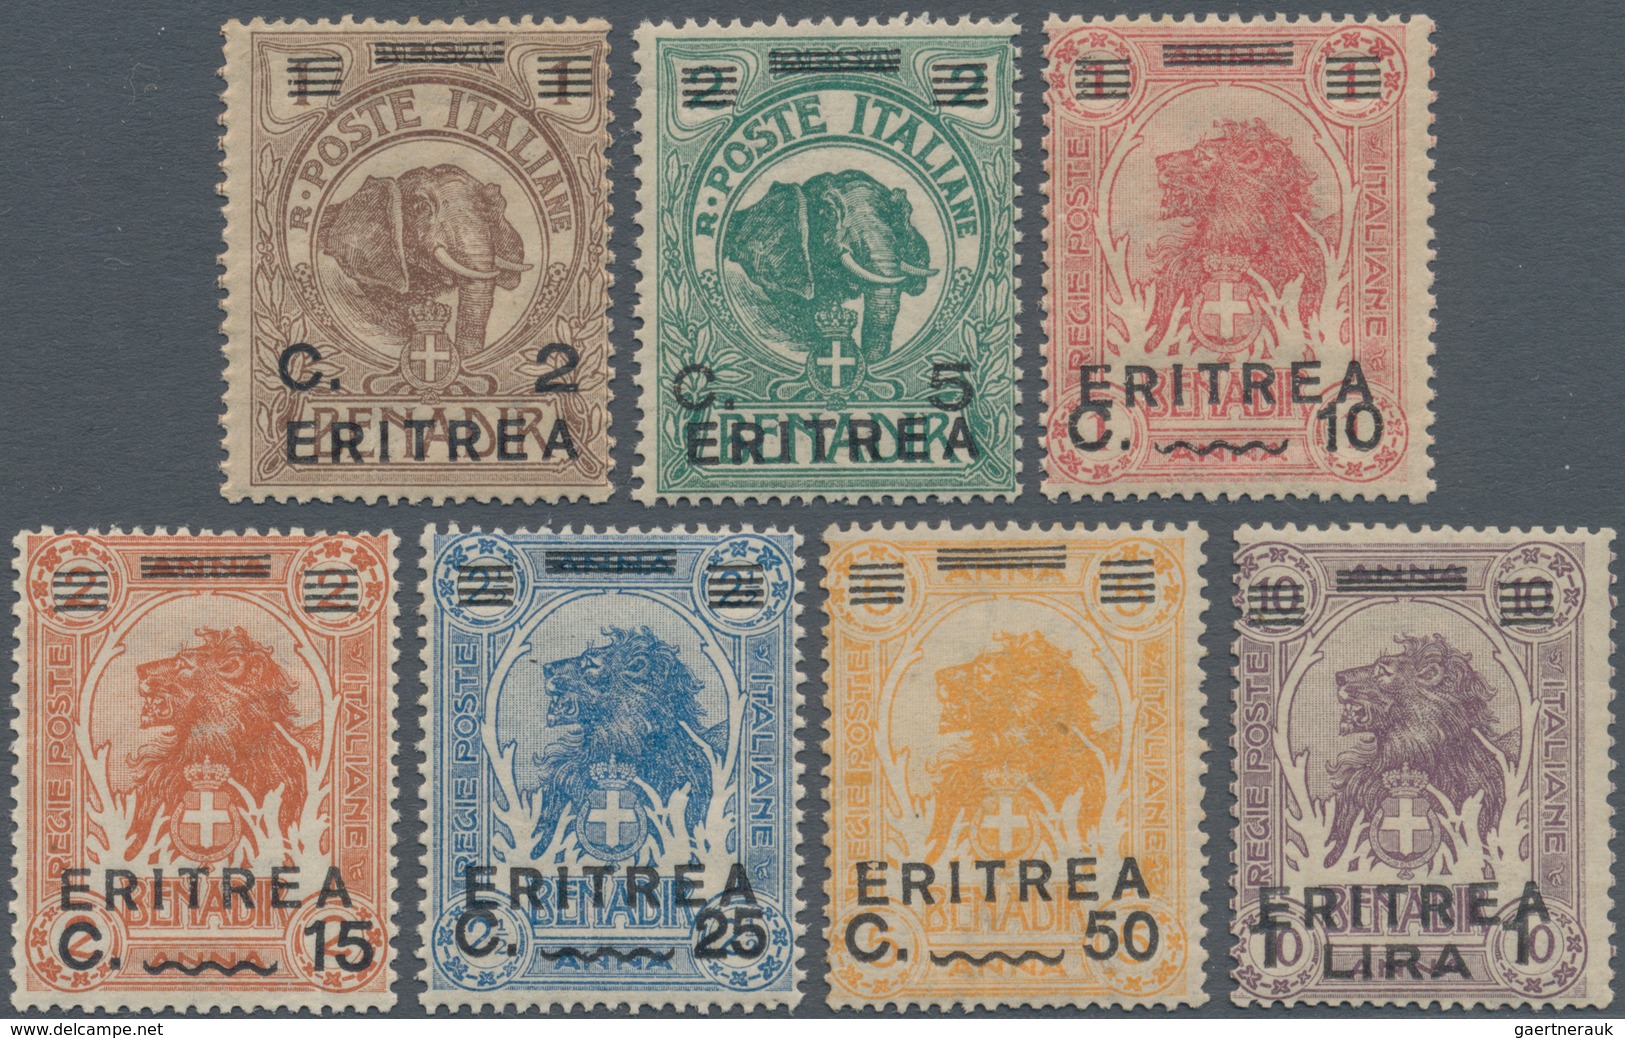 Italienisch-Eritrea: 1922, Elephant And Lion Head Stamps From Benadir With Black Opt. ‚ERITREA‘ And - Eritrea